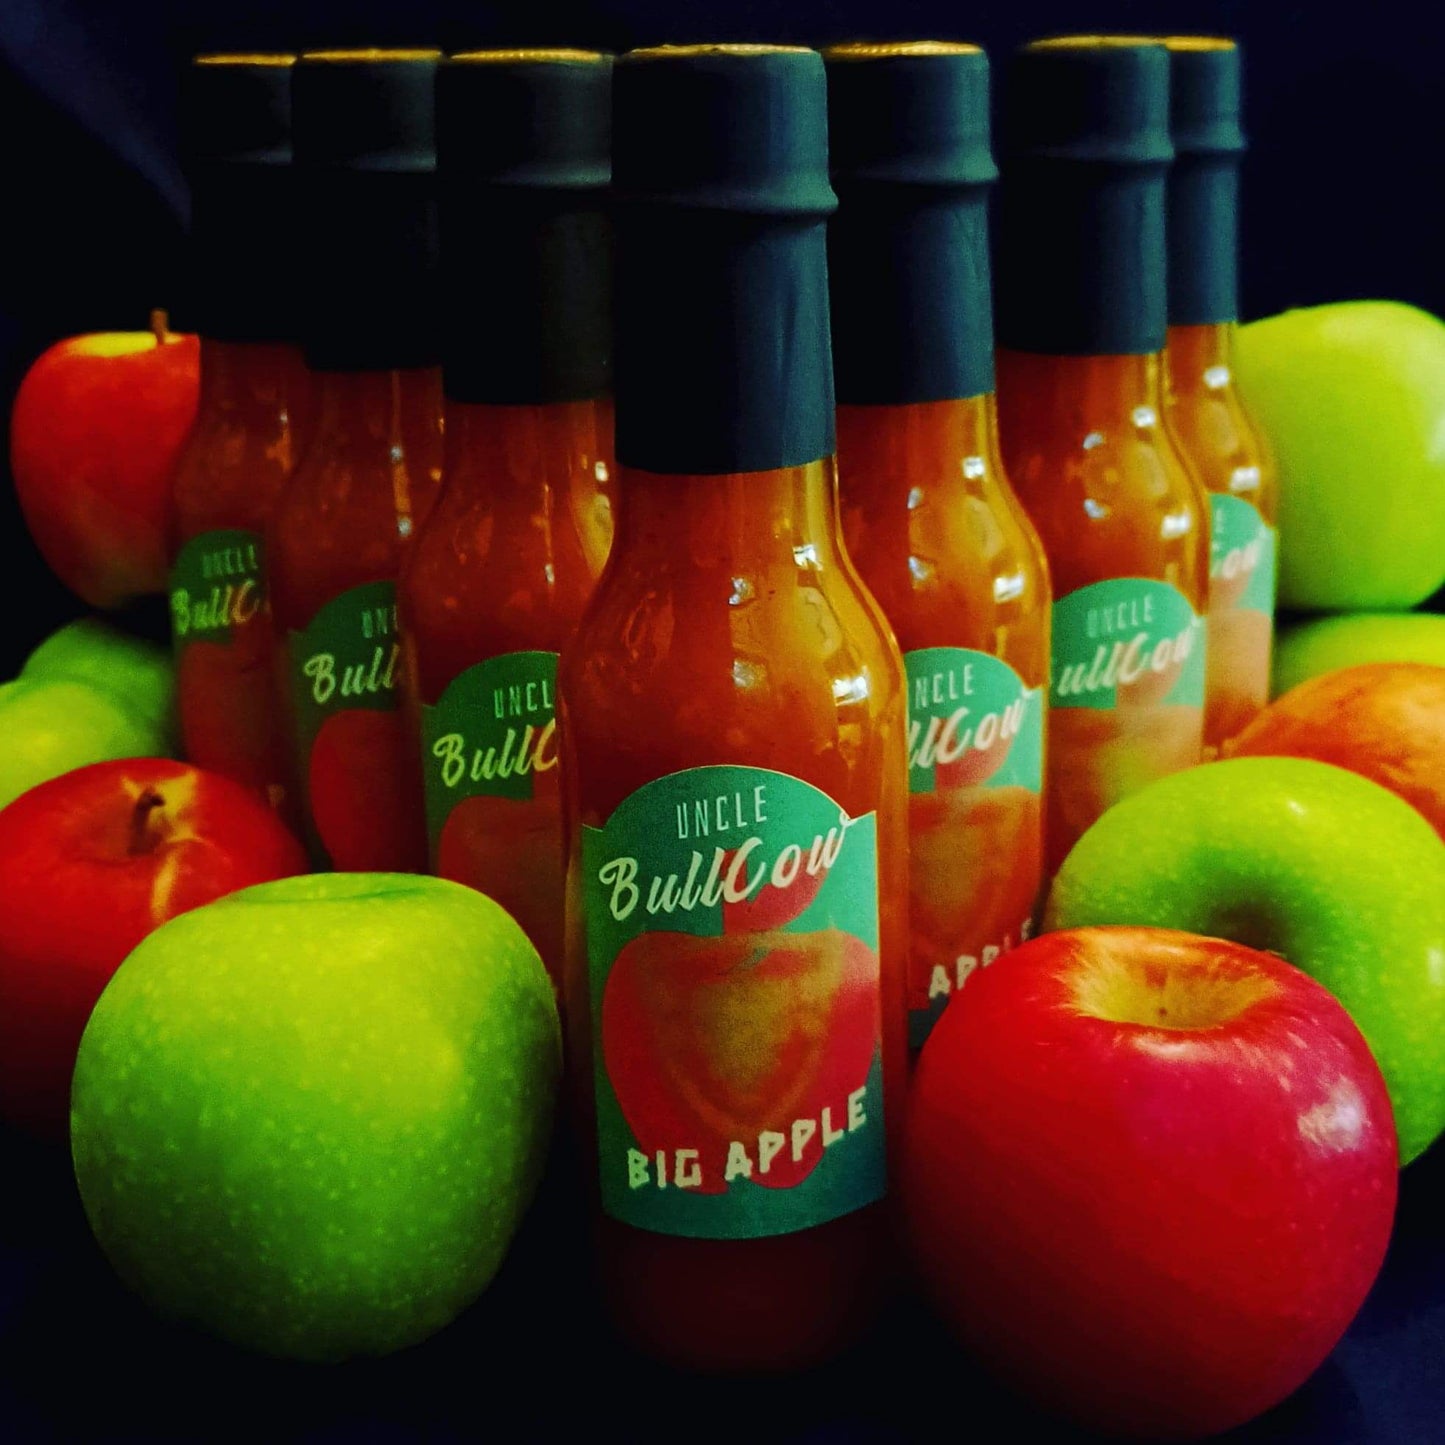 Uncle Bullcow’s Big Apple Hot Sauce